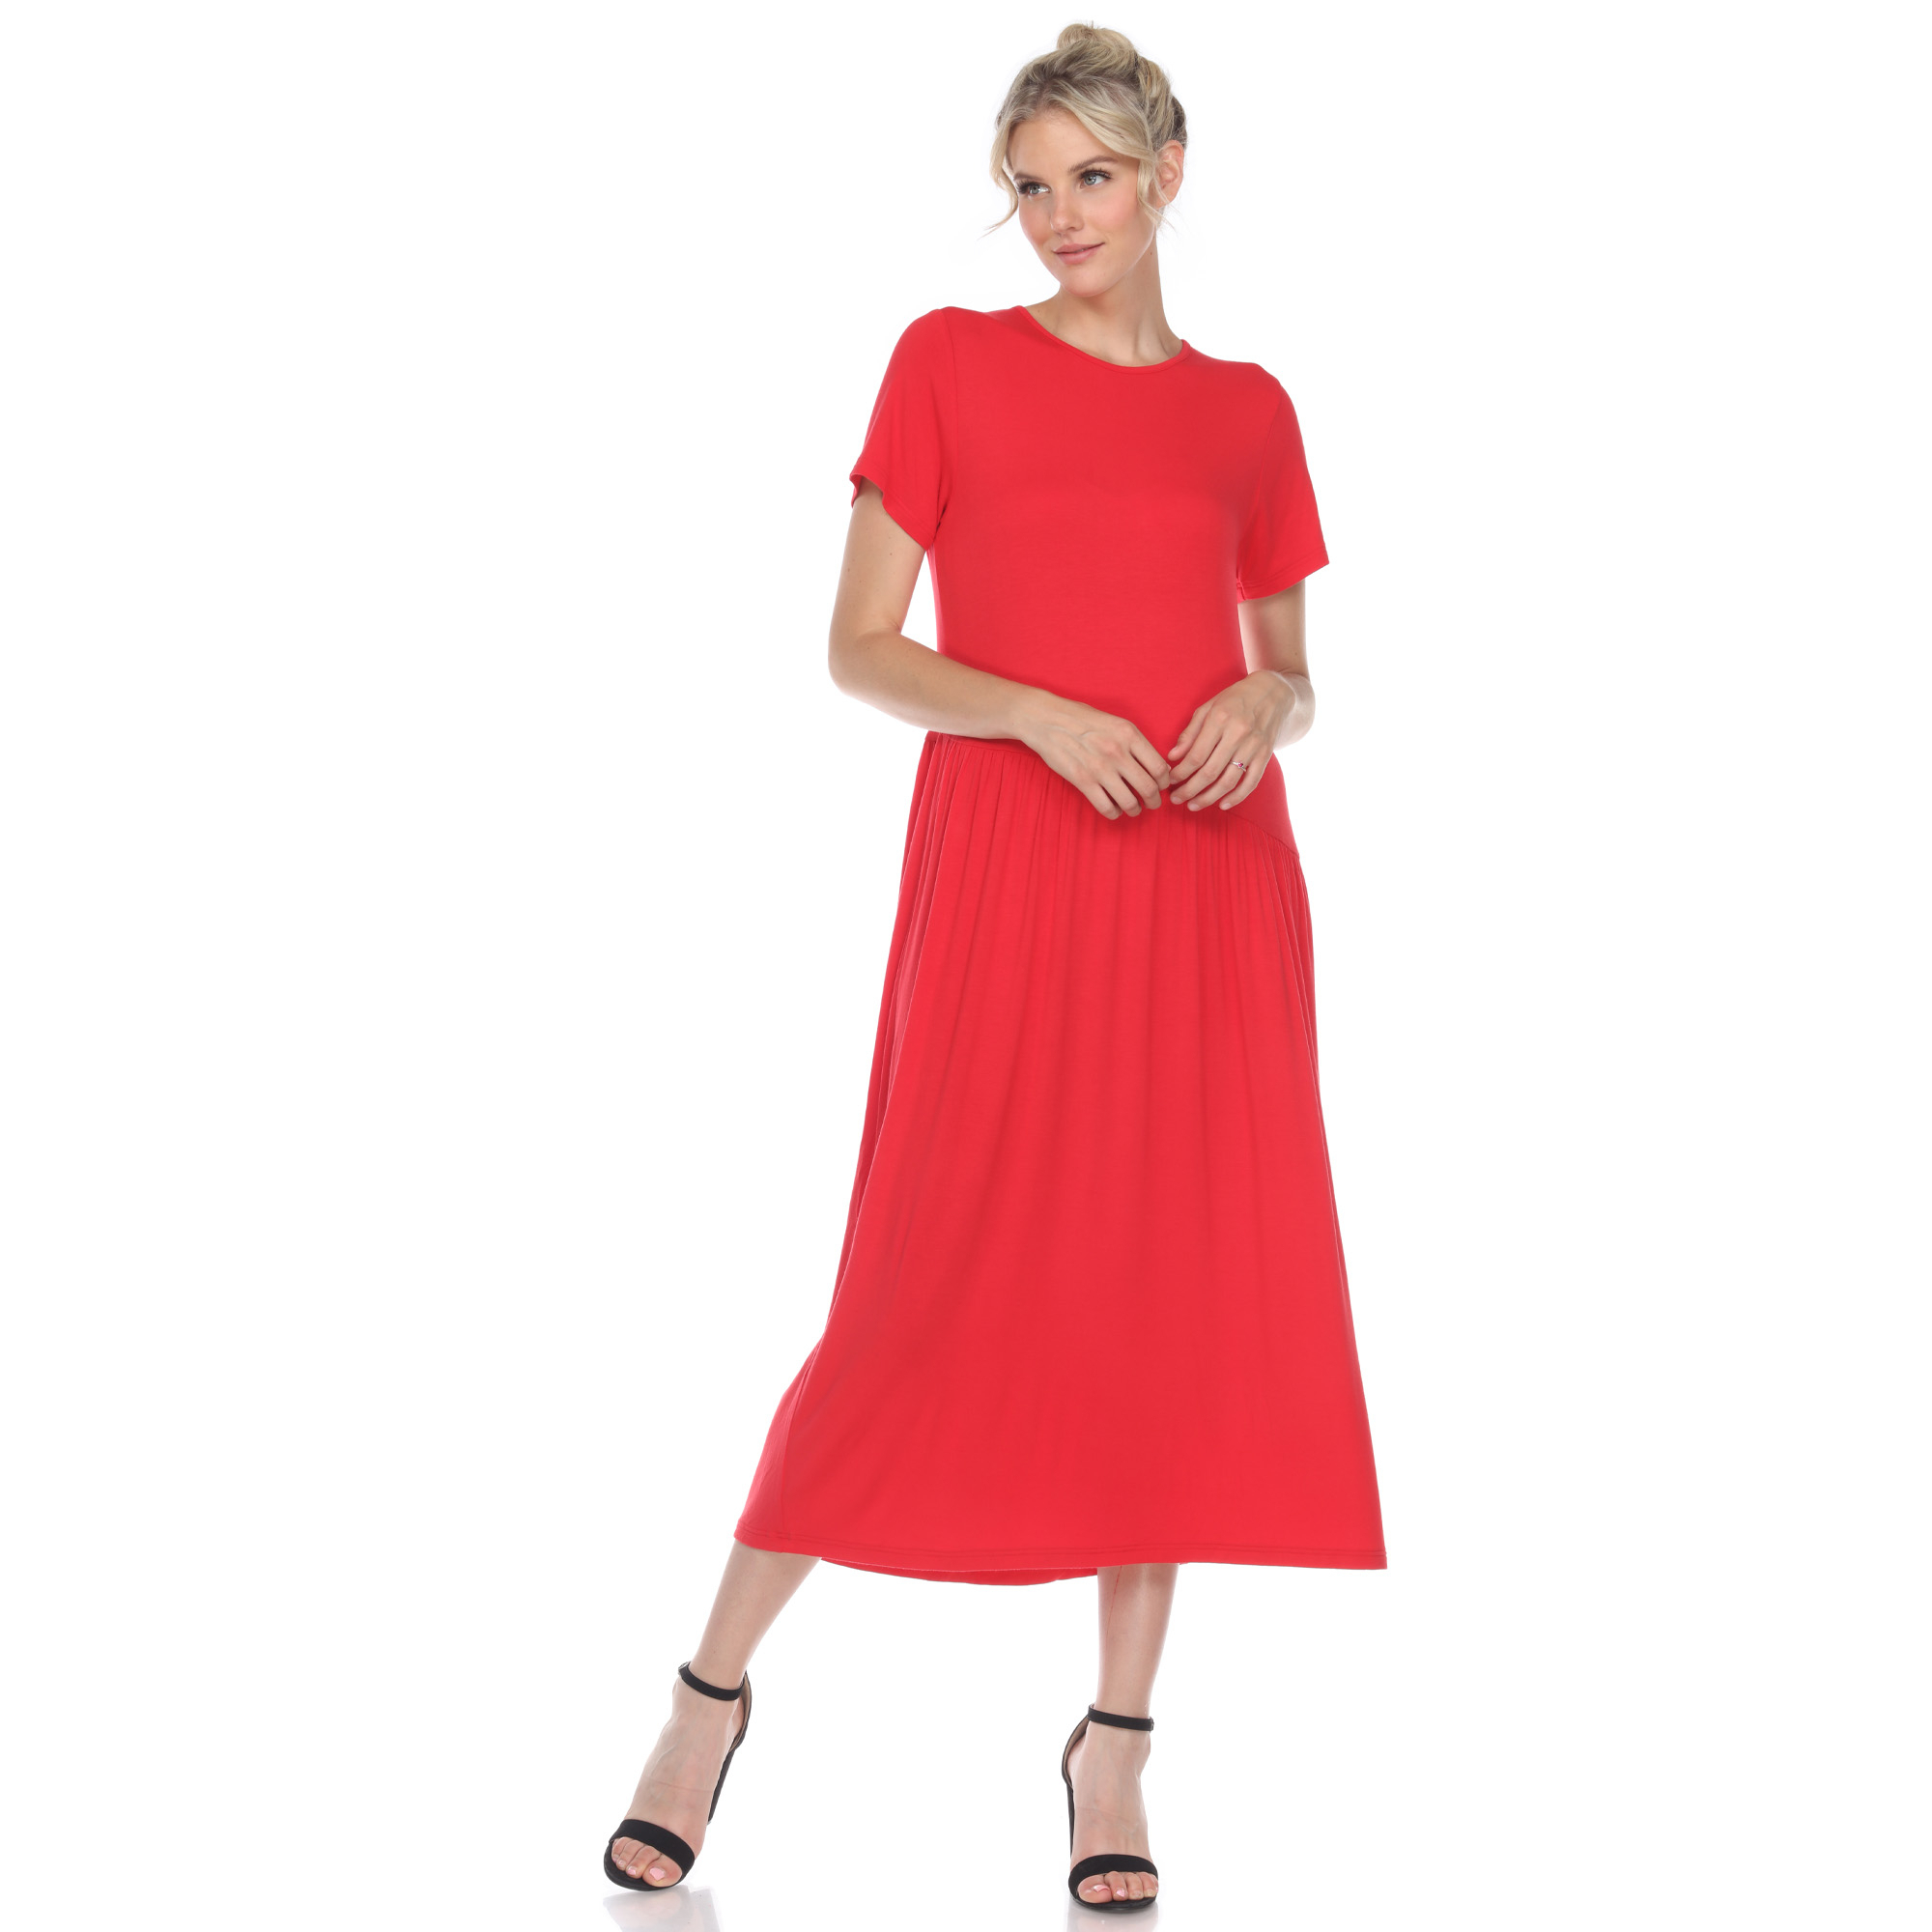 White Mark Womenâs Short Sleeve Maxi Dress - Red, Small